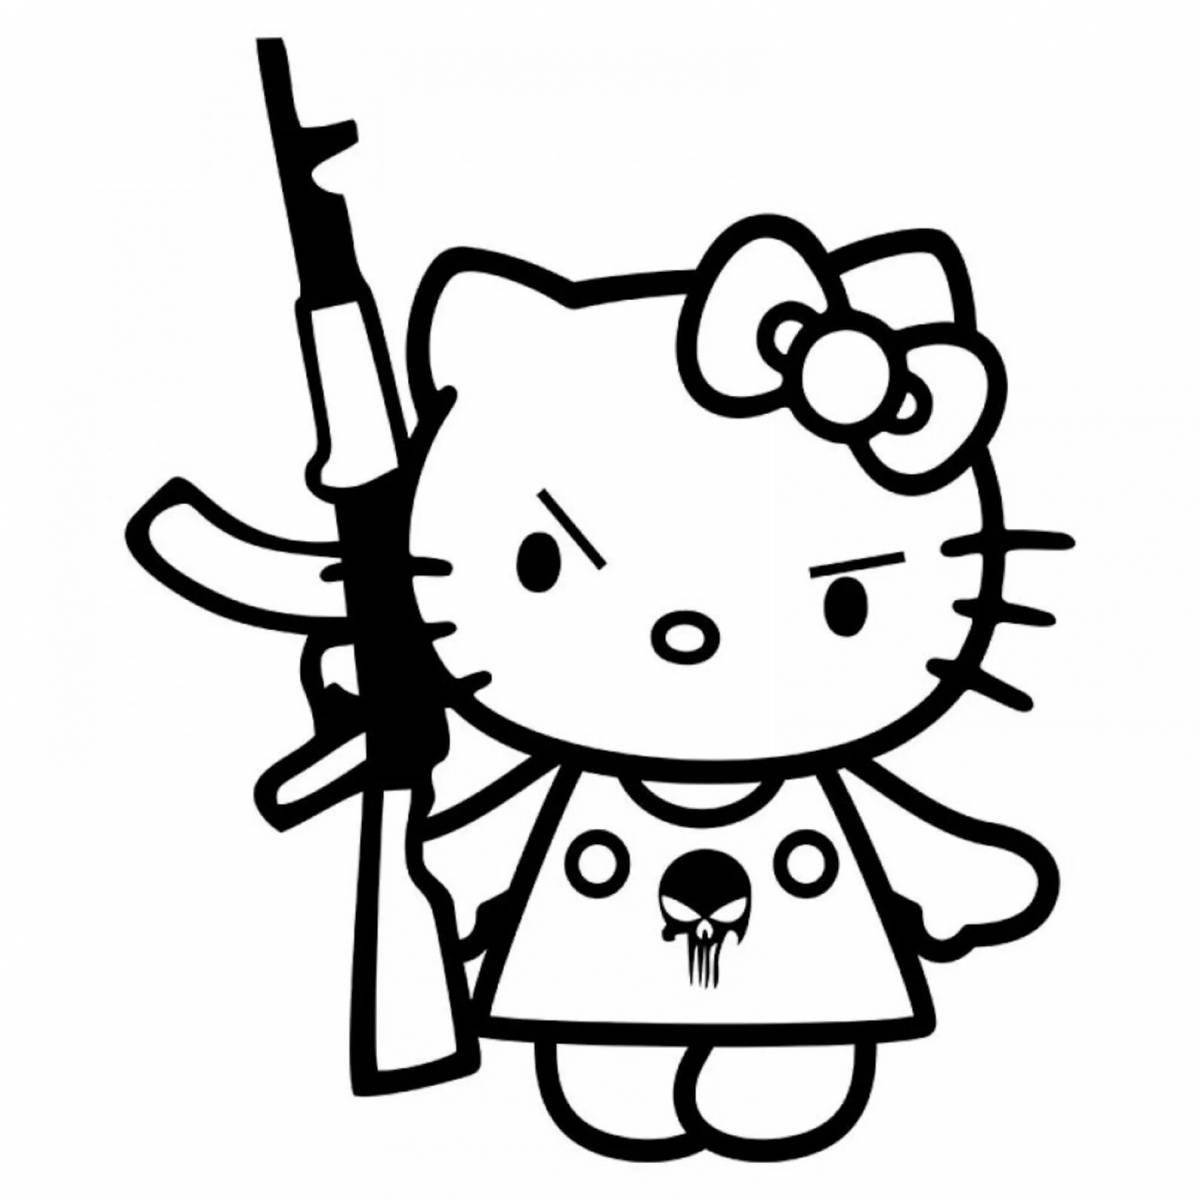 Привлечение hello kitty с помощью пистолета